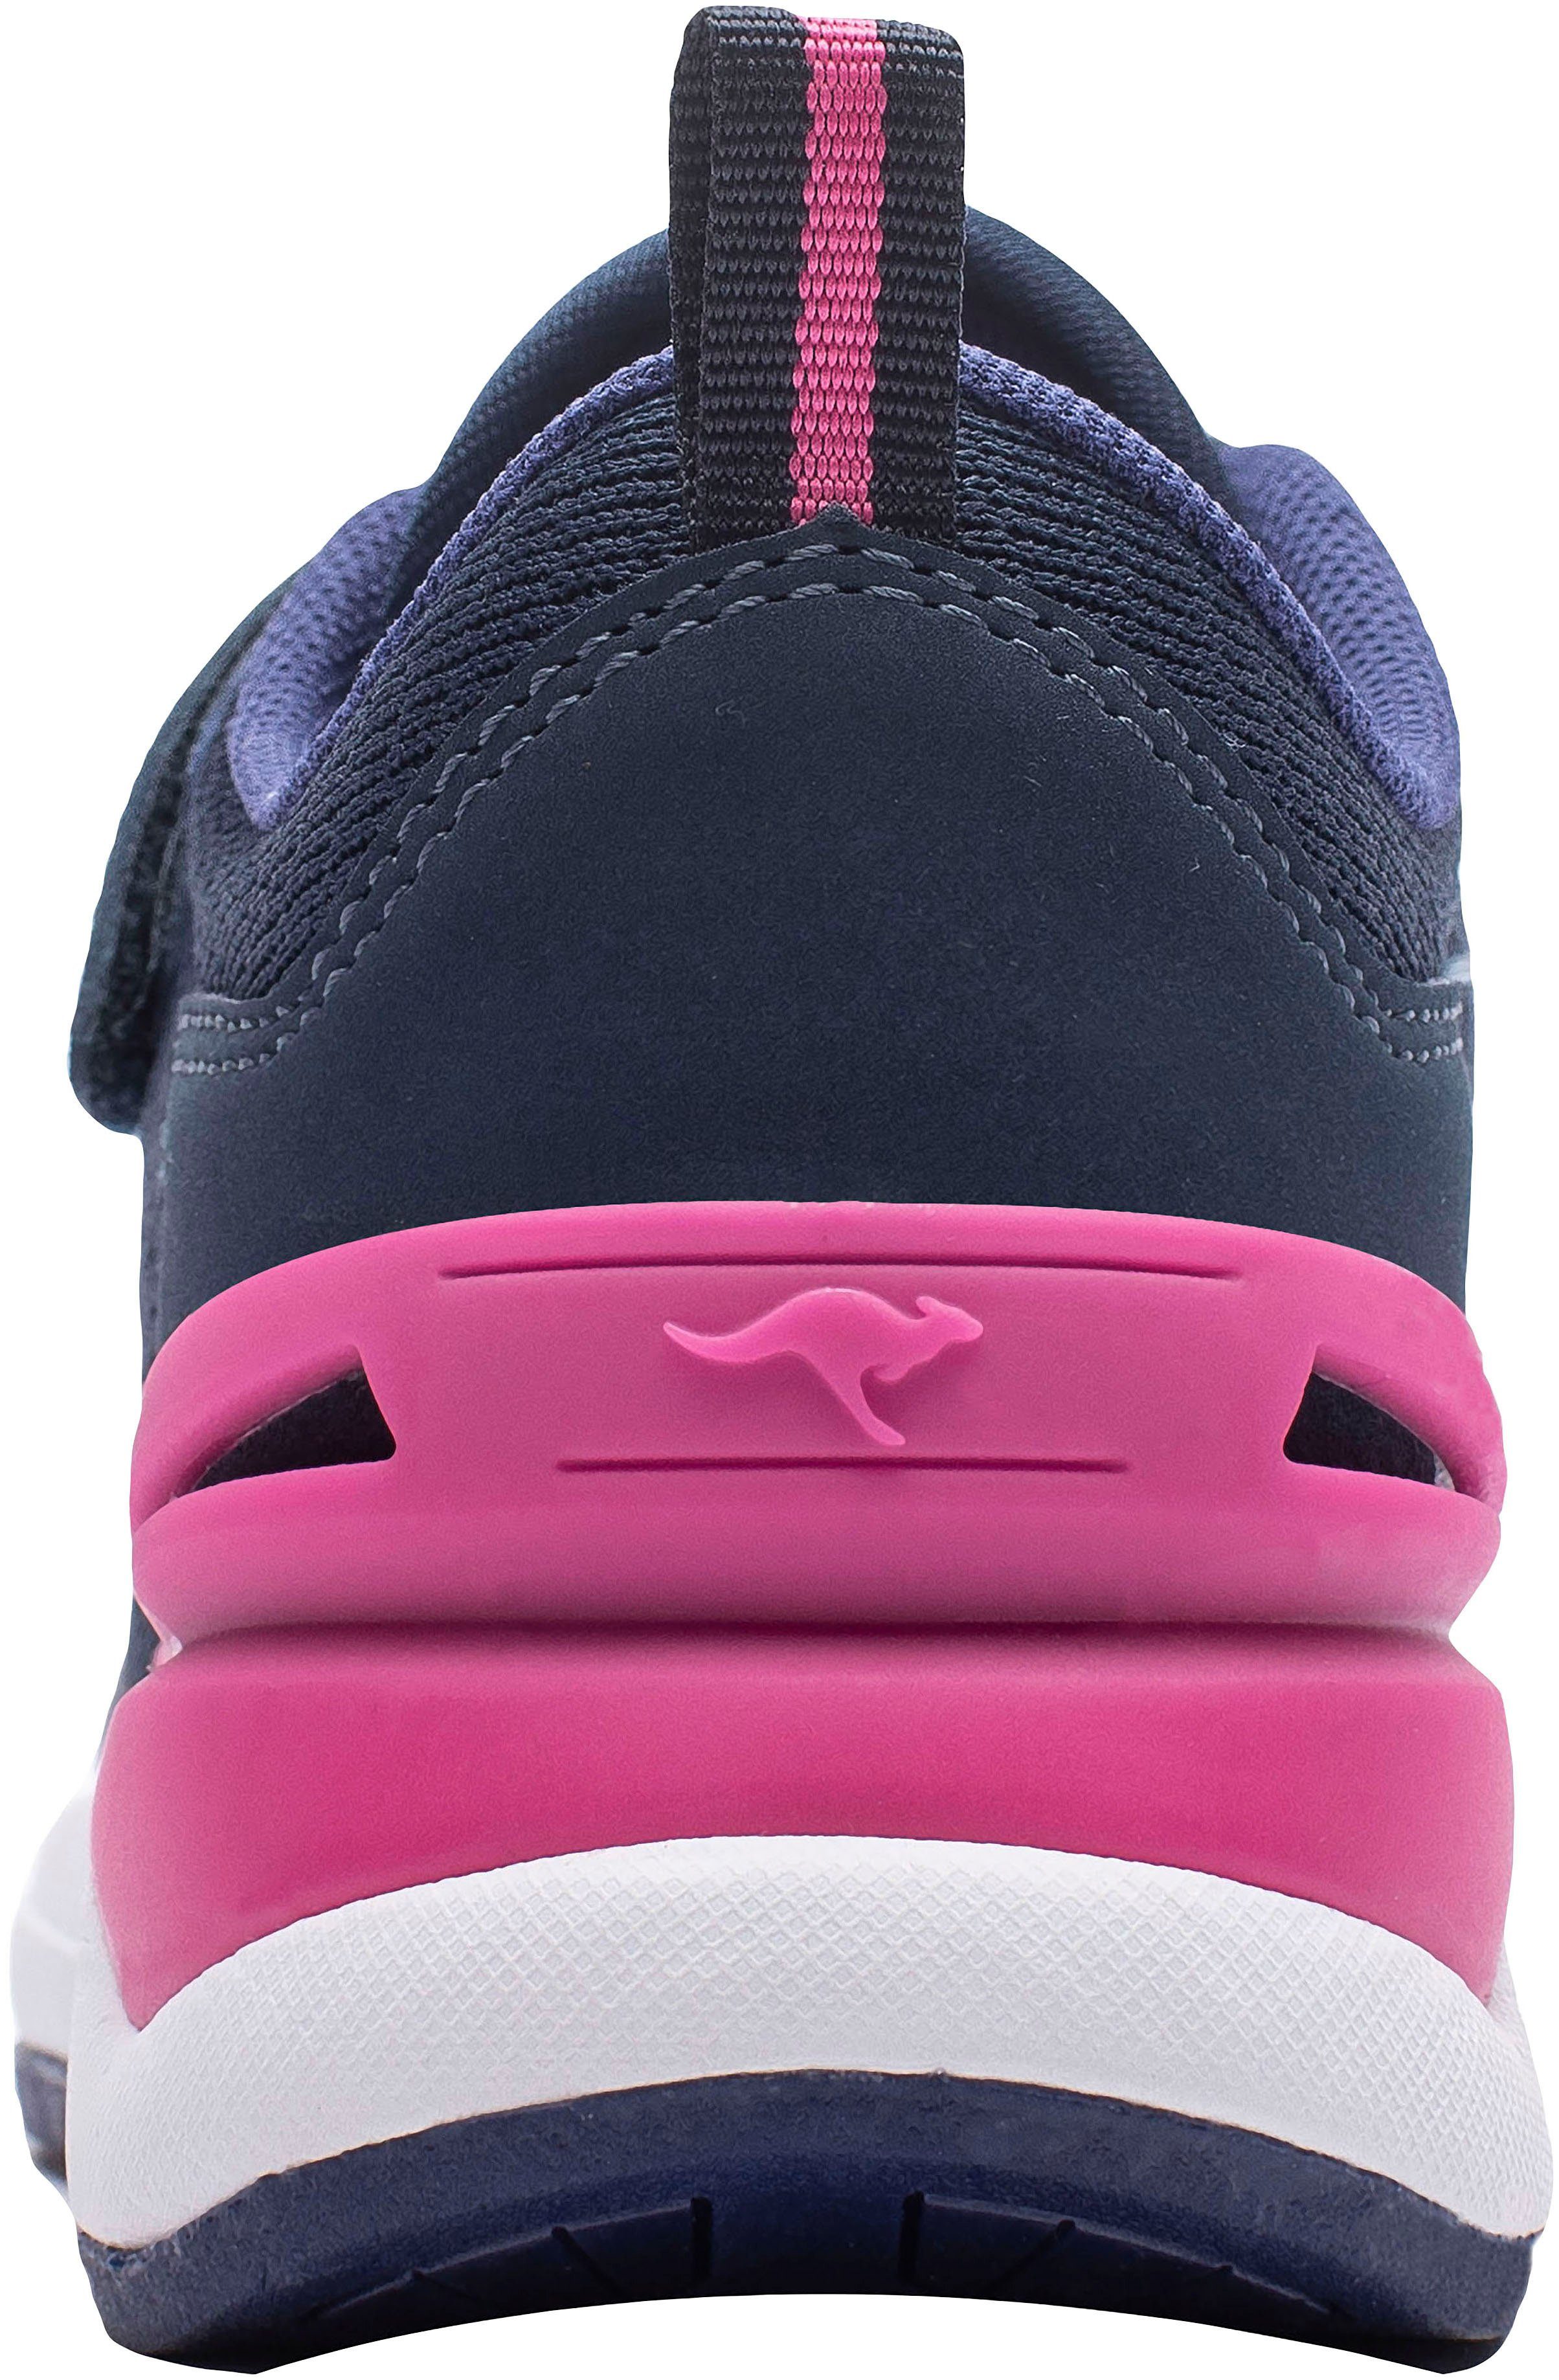 KangaROOS KD-Gym EV Sneaker mit Klettverschluss navy-pink